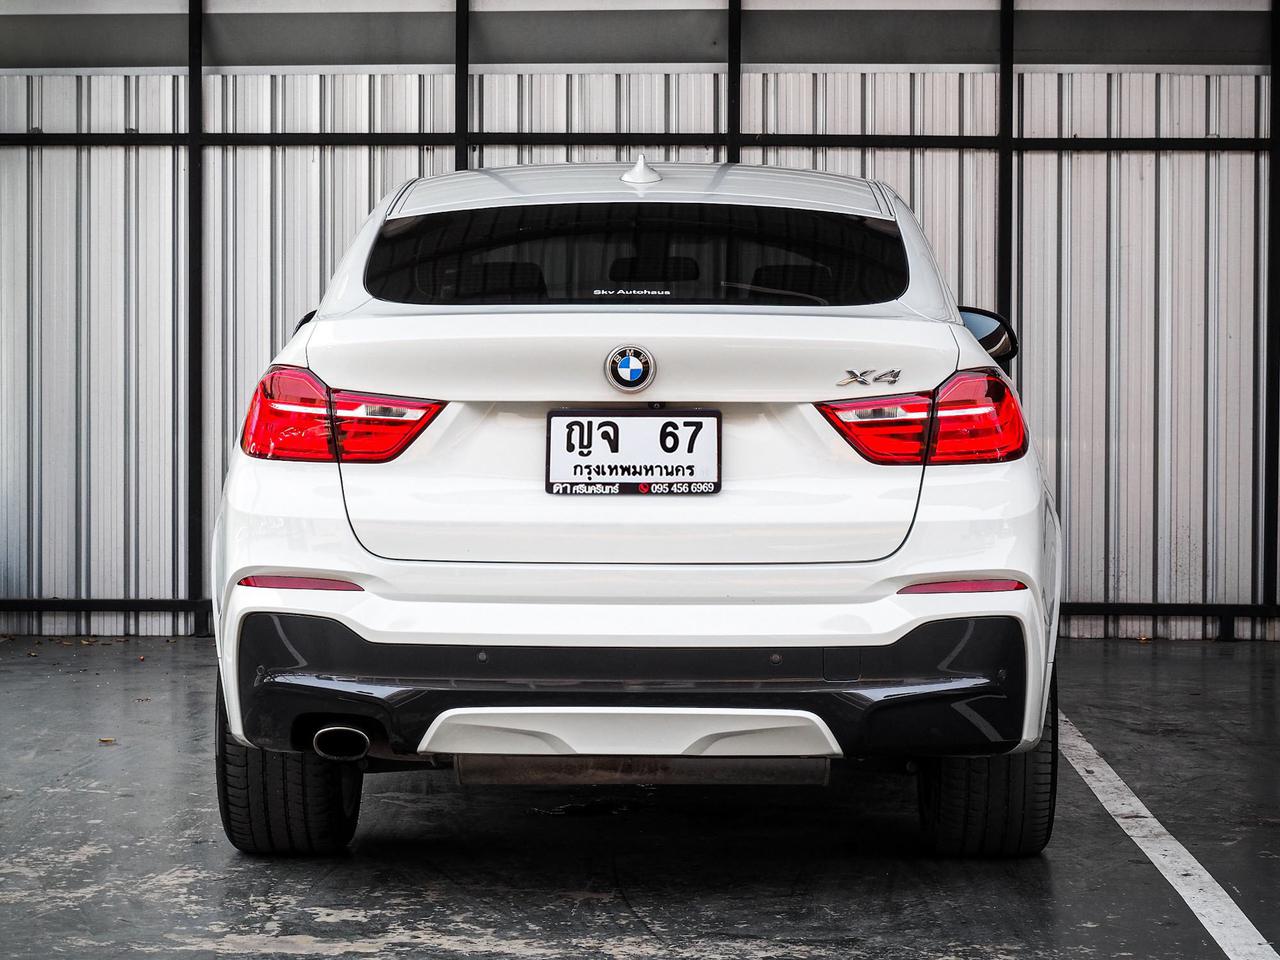 BMW X4 2.0 M Sport เบนซิน ปี 2019 สีขาว รุ่น Top สุด M Sport แท้ จากศูนย์ BMW รูปที่ 5